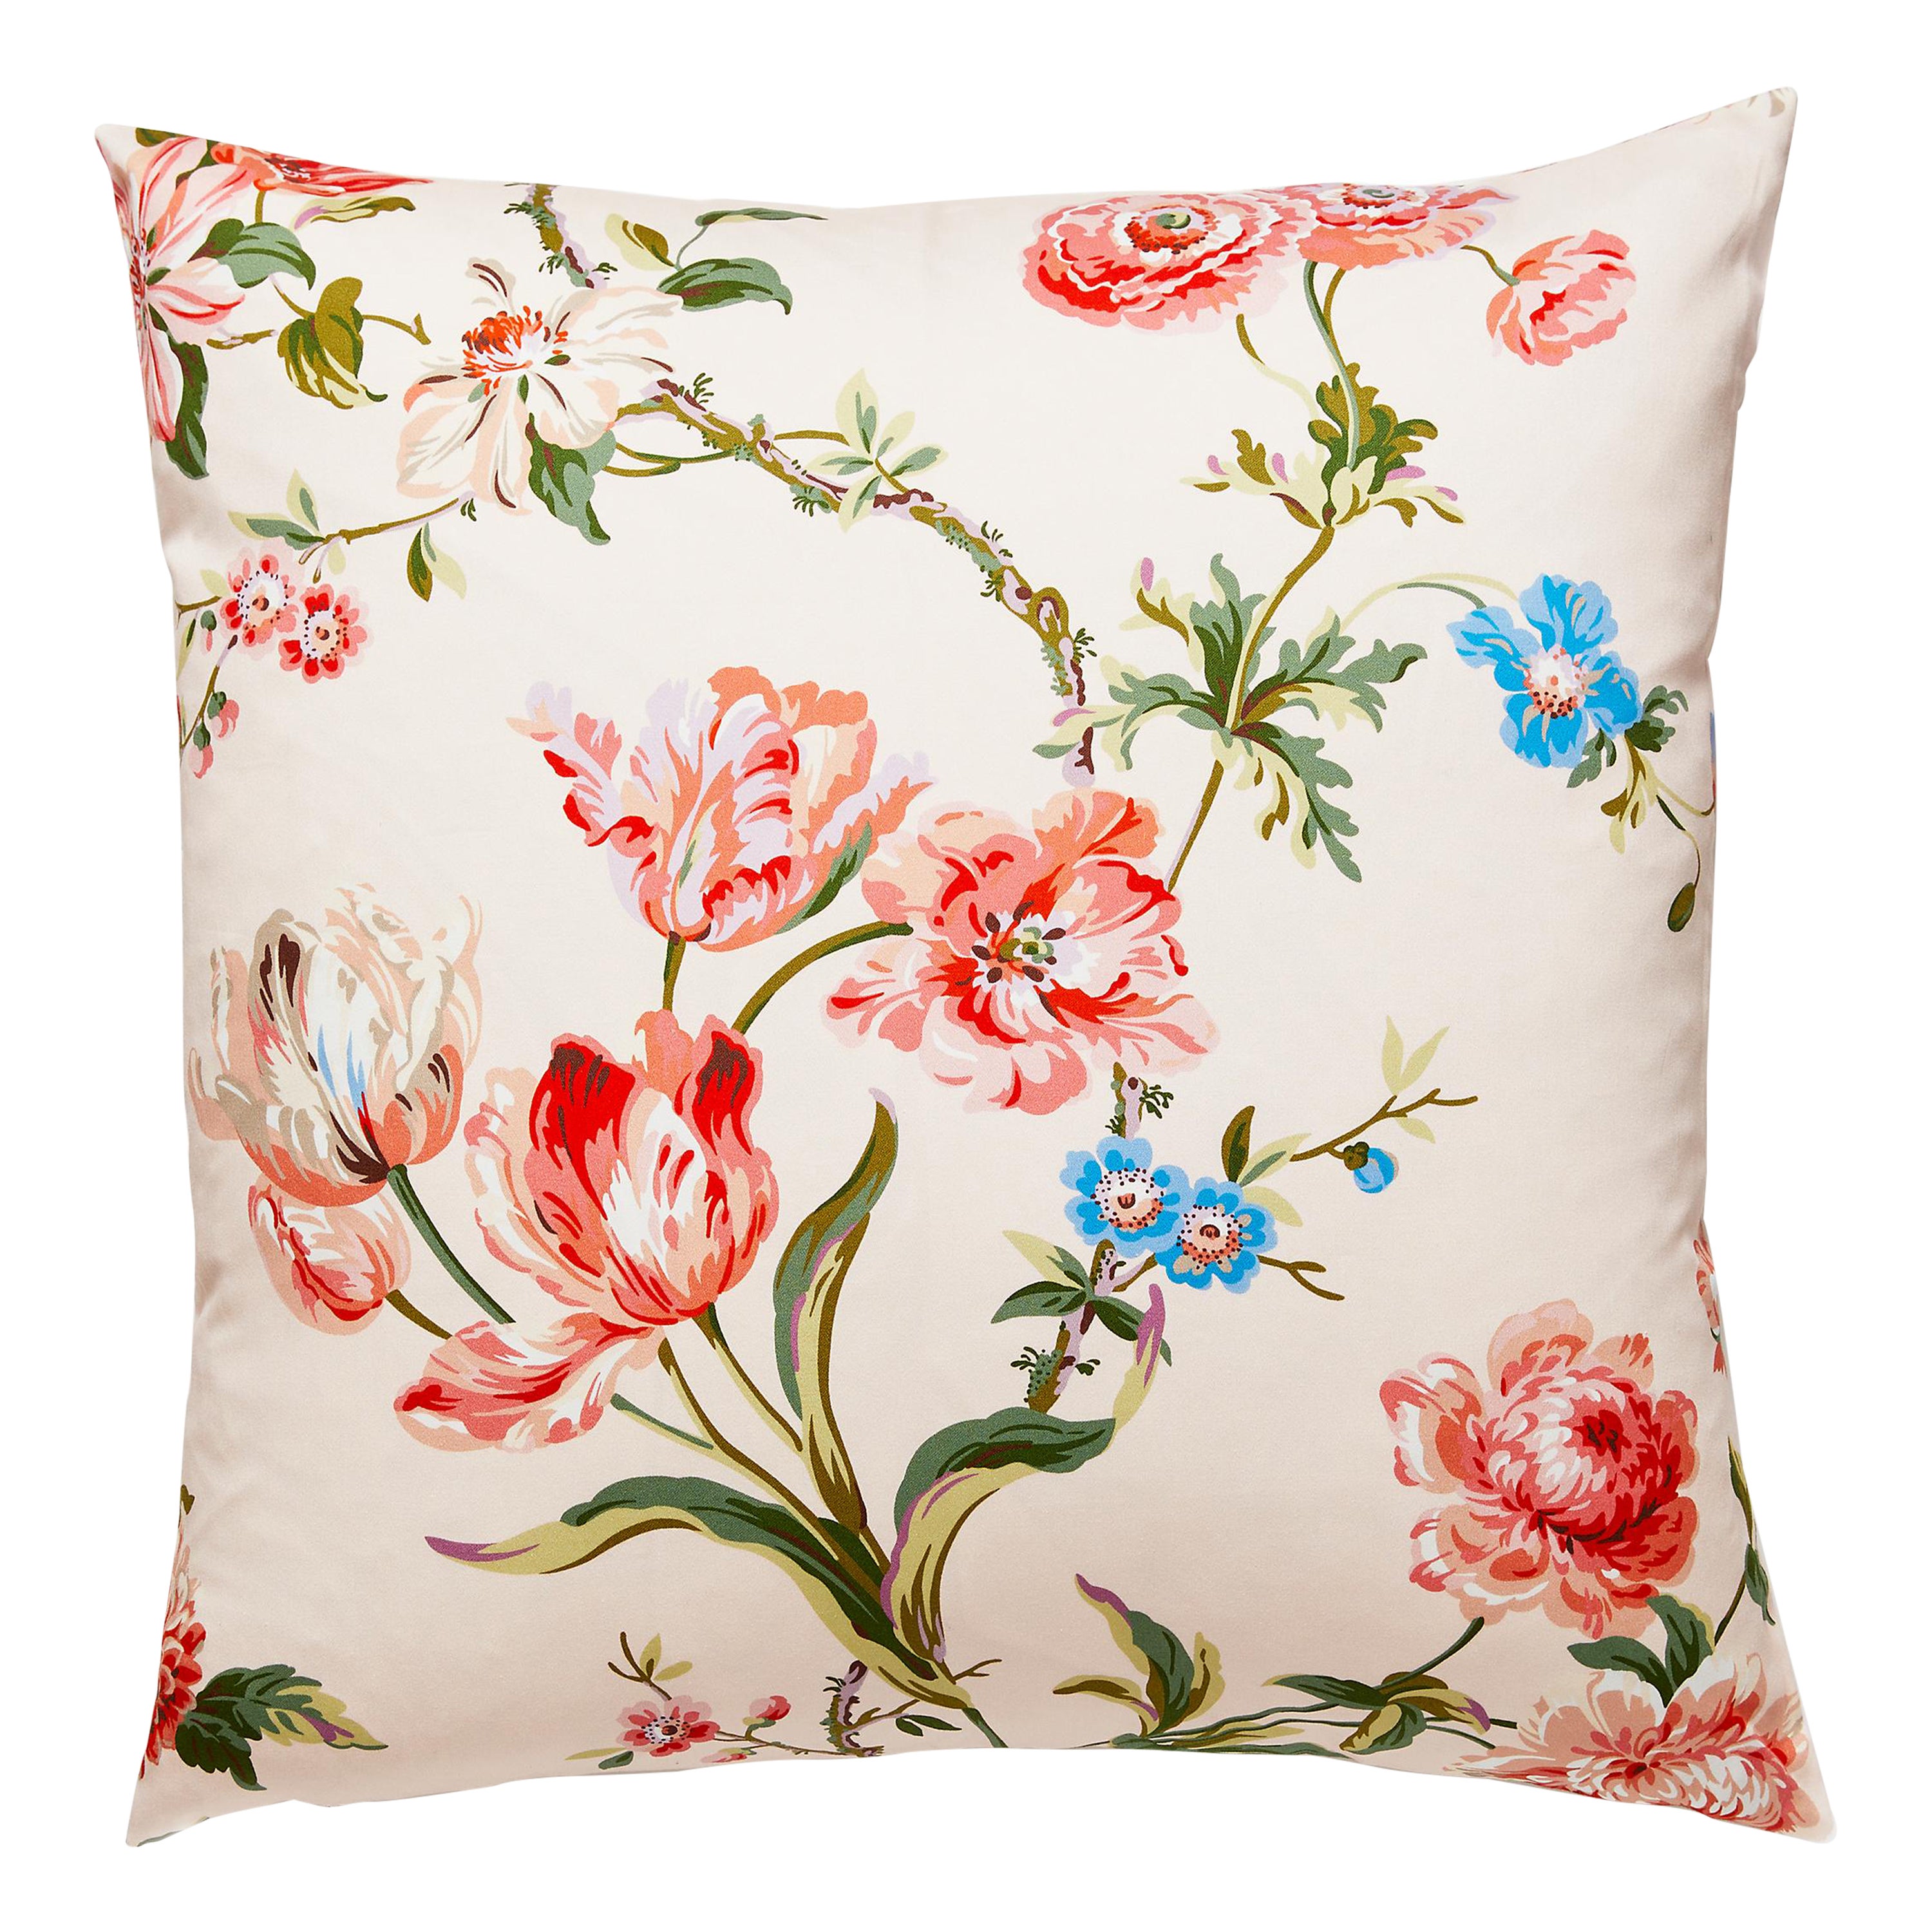 Botanical Garden Pillow For Sale